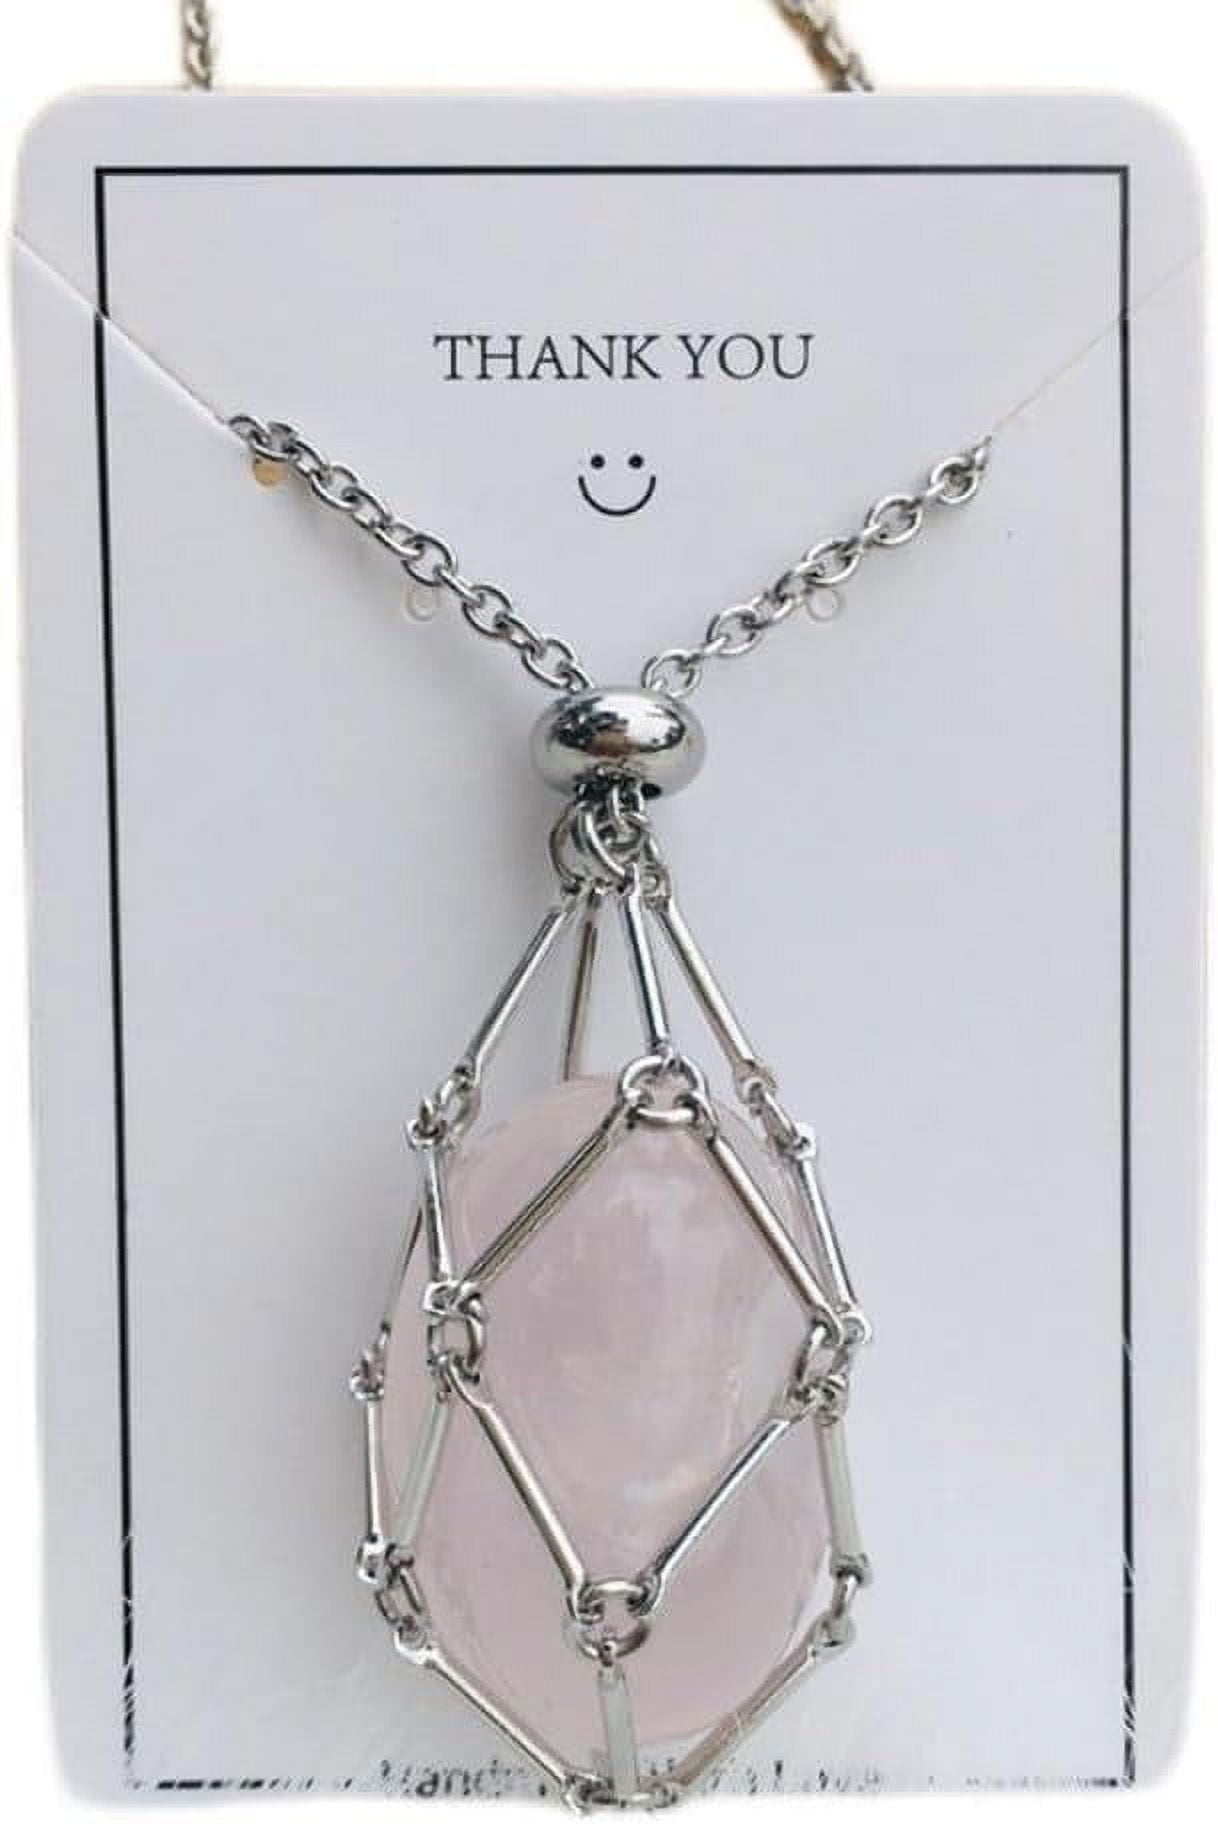 Crystal Holder Necklace, Interchangeable Crystal Necklace, Metal Macramé,  Crystal Basket, Pocket, Cage, D20 Holder, Chainmail Necklace 